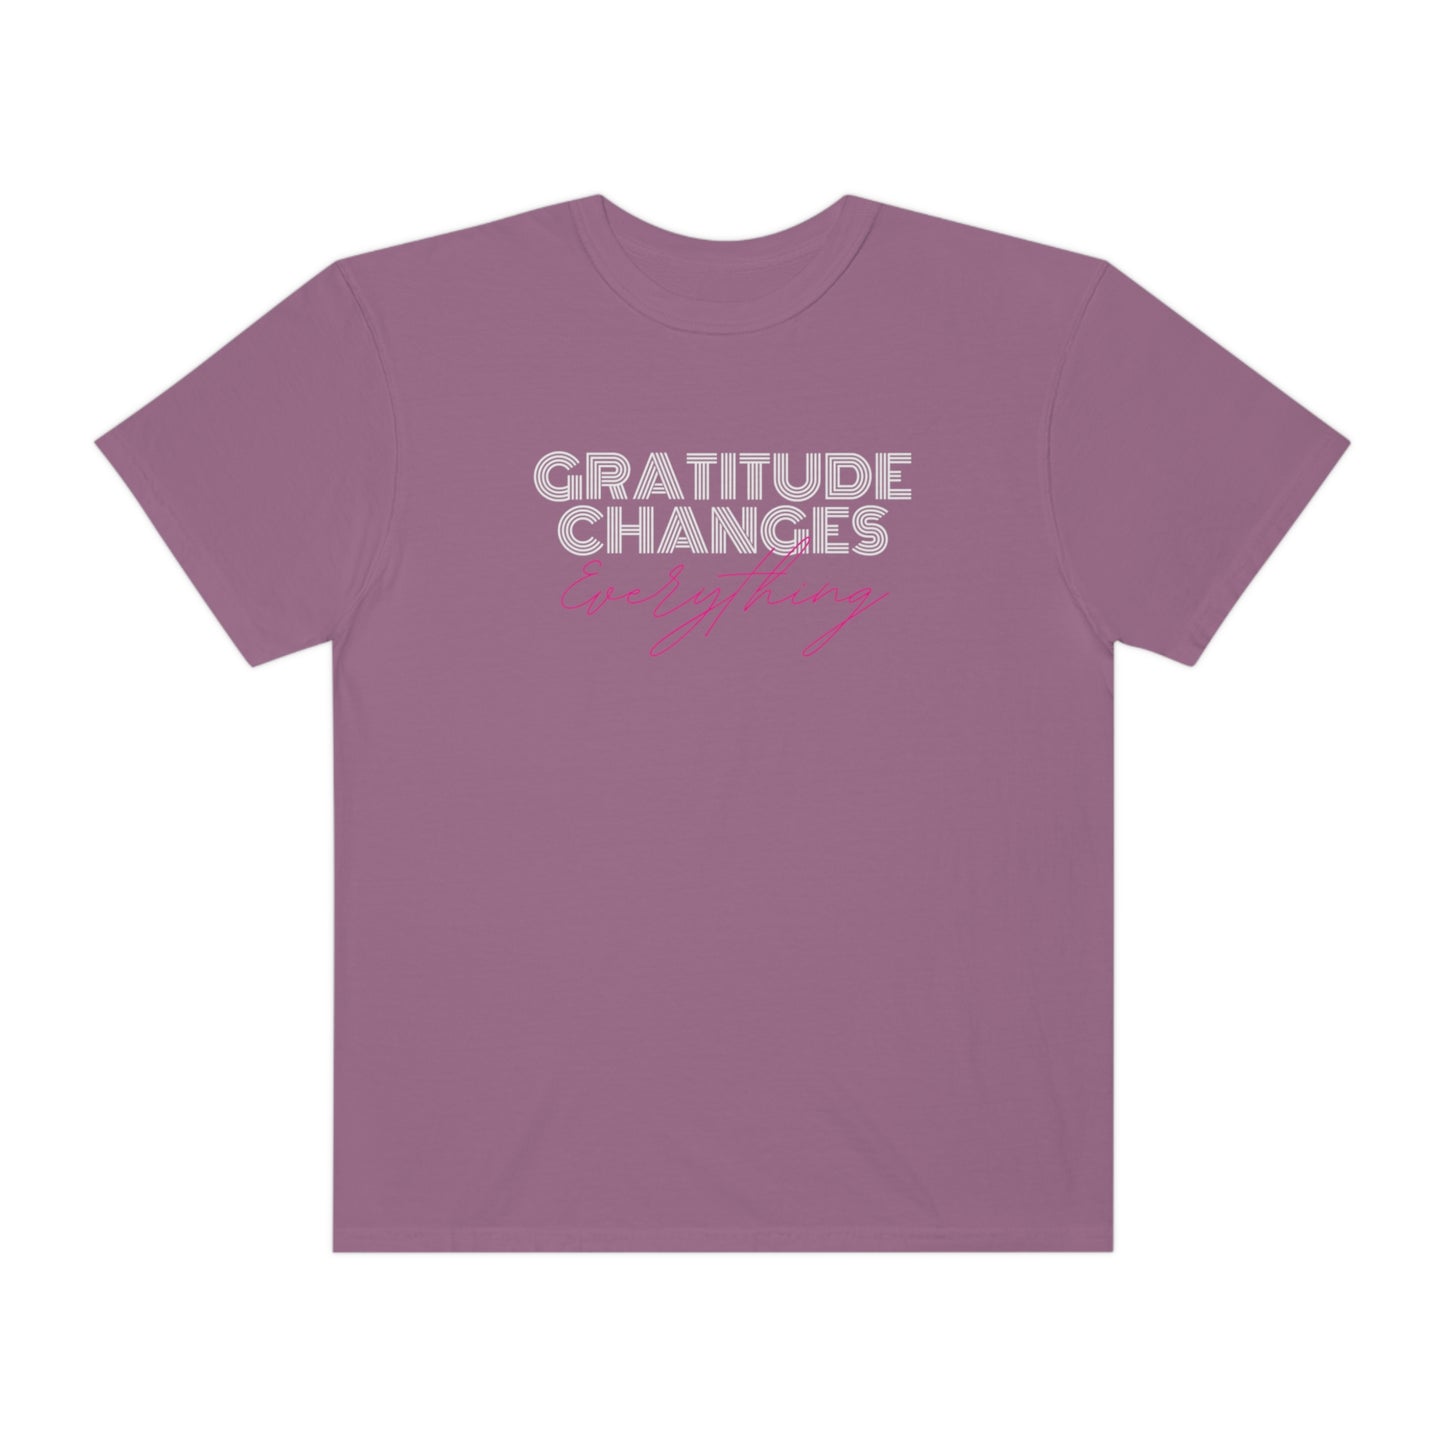 Gratitude T-shirt